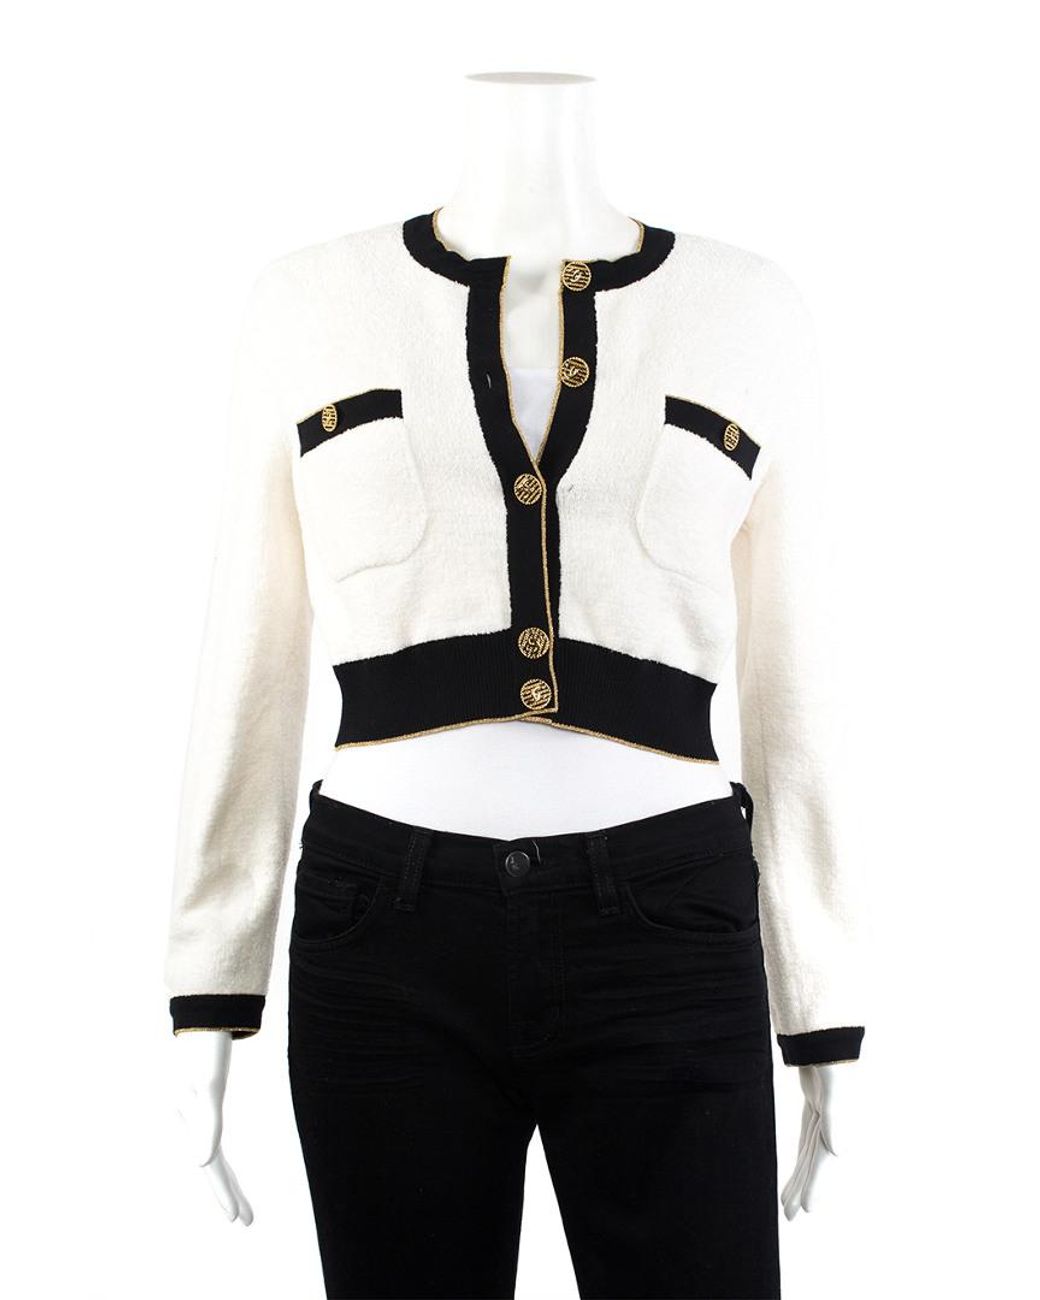 Chanel 2019 Cruise White Cardigan Sweater, Size Eu 34 | Lyst